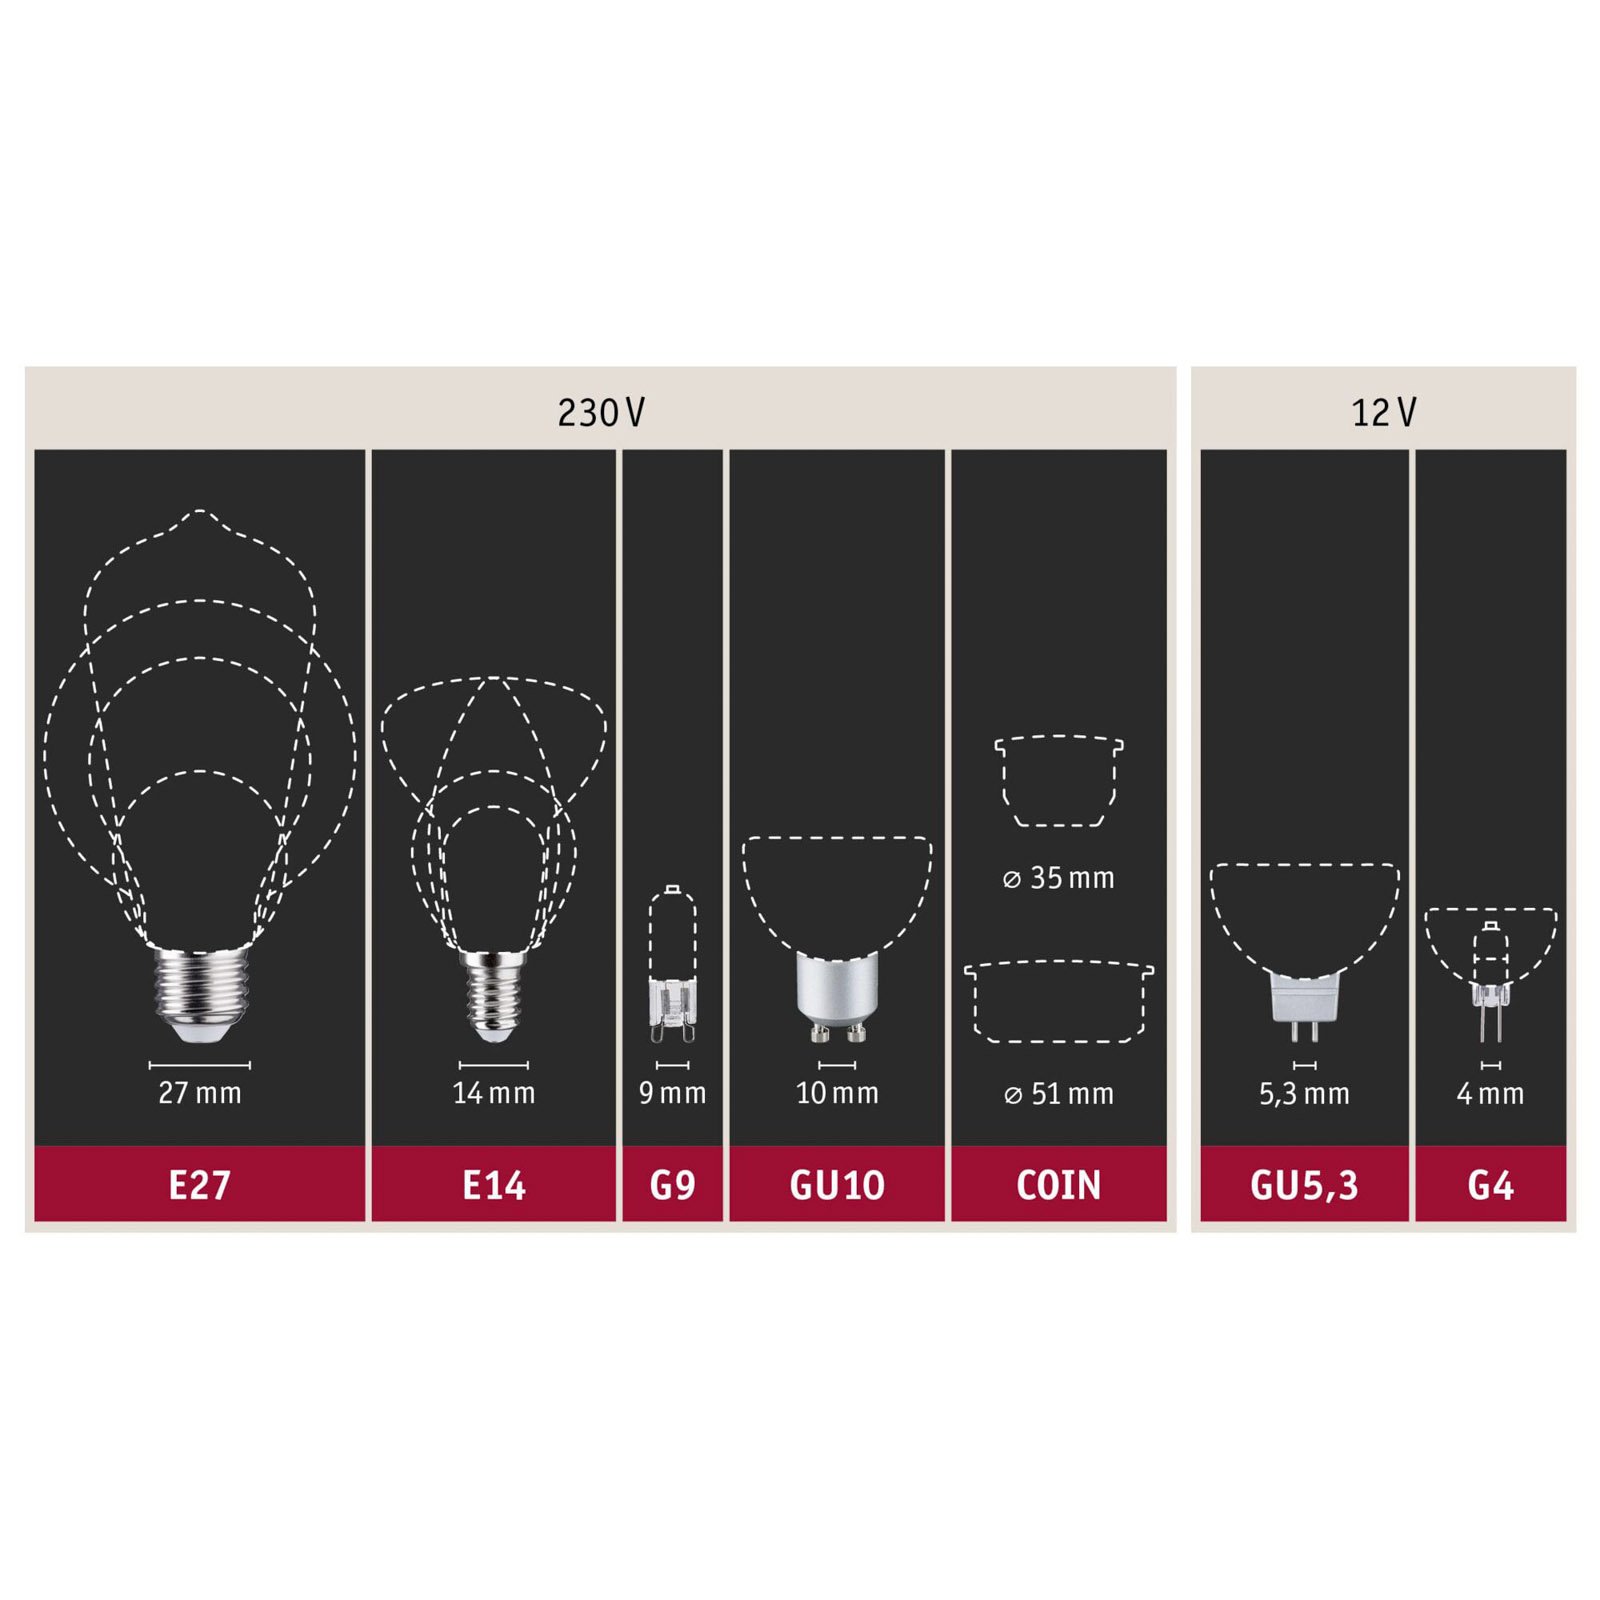 LED-Lampe E27 9W Filament 2.700K klar dimmbar